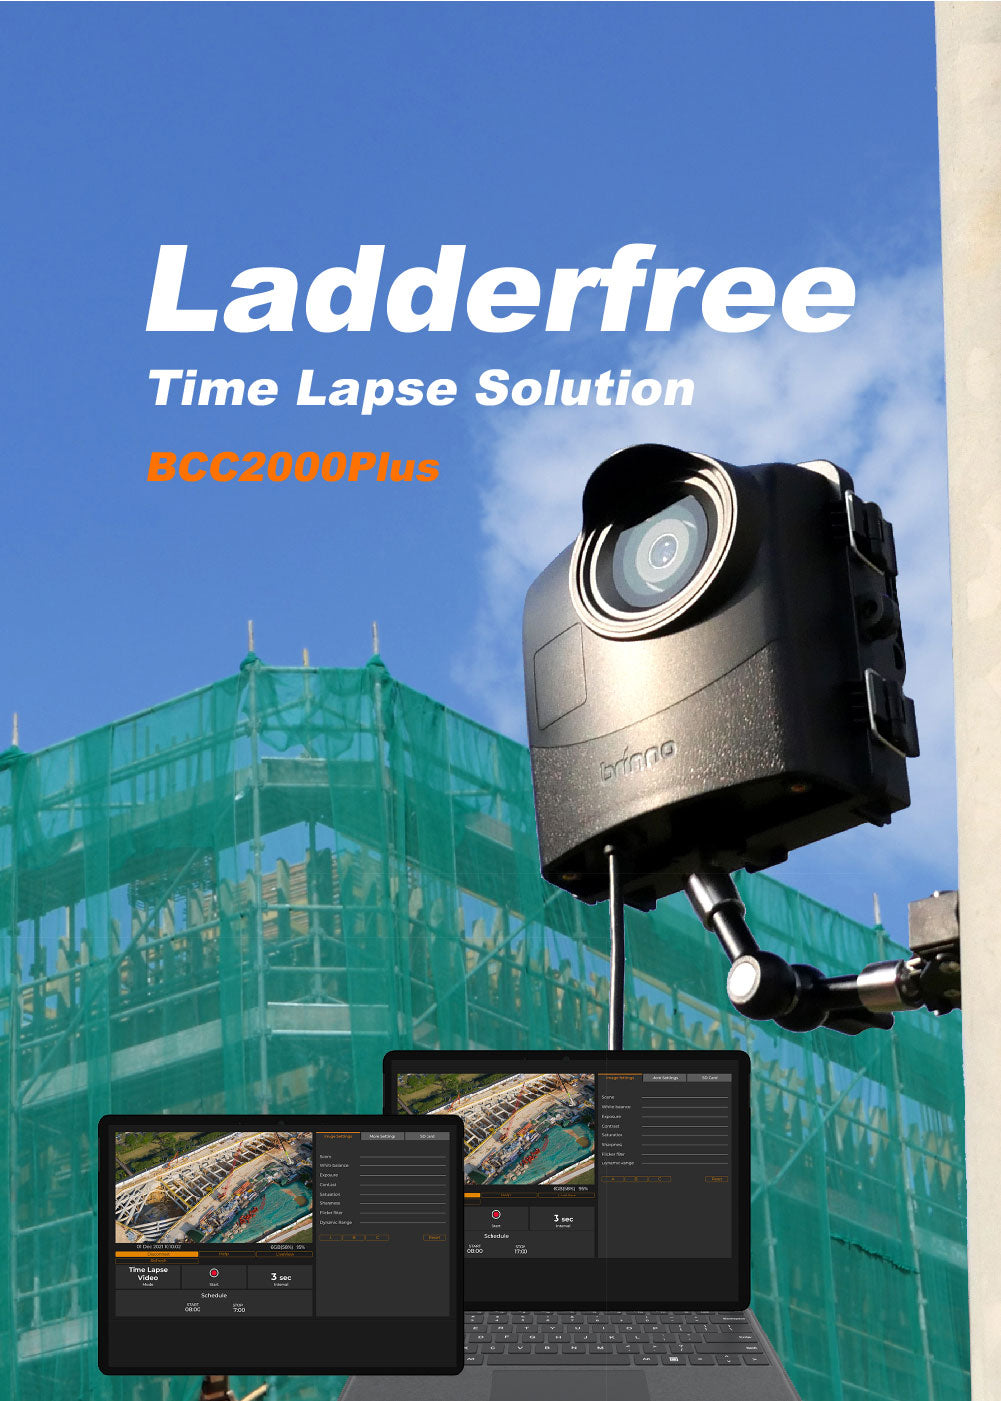 BCC2000PLUS Time Lapse Camera-LADDERFREE-HEADER-RWD